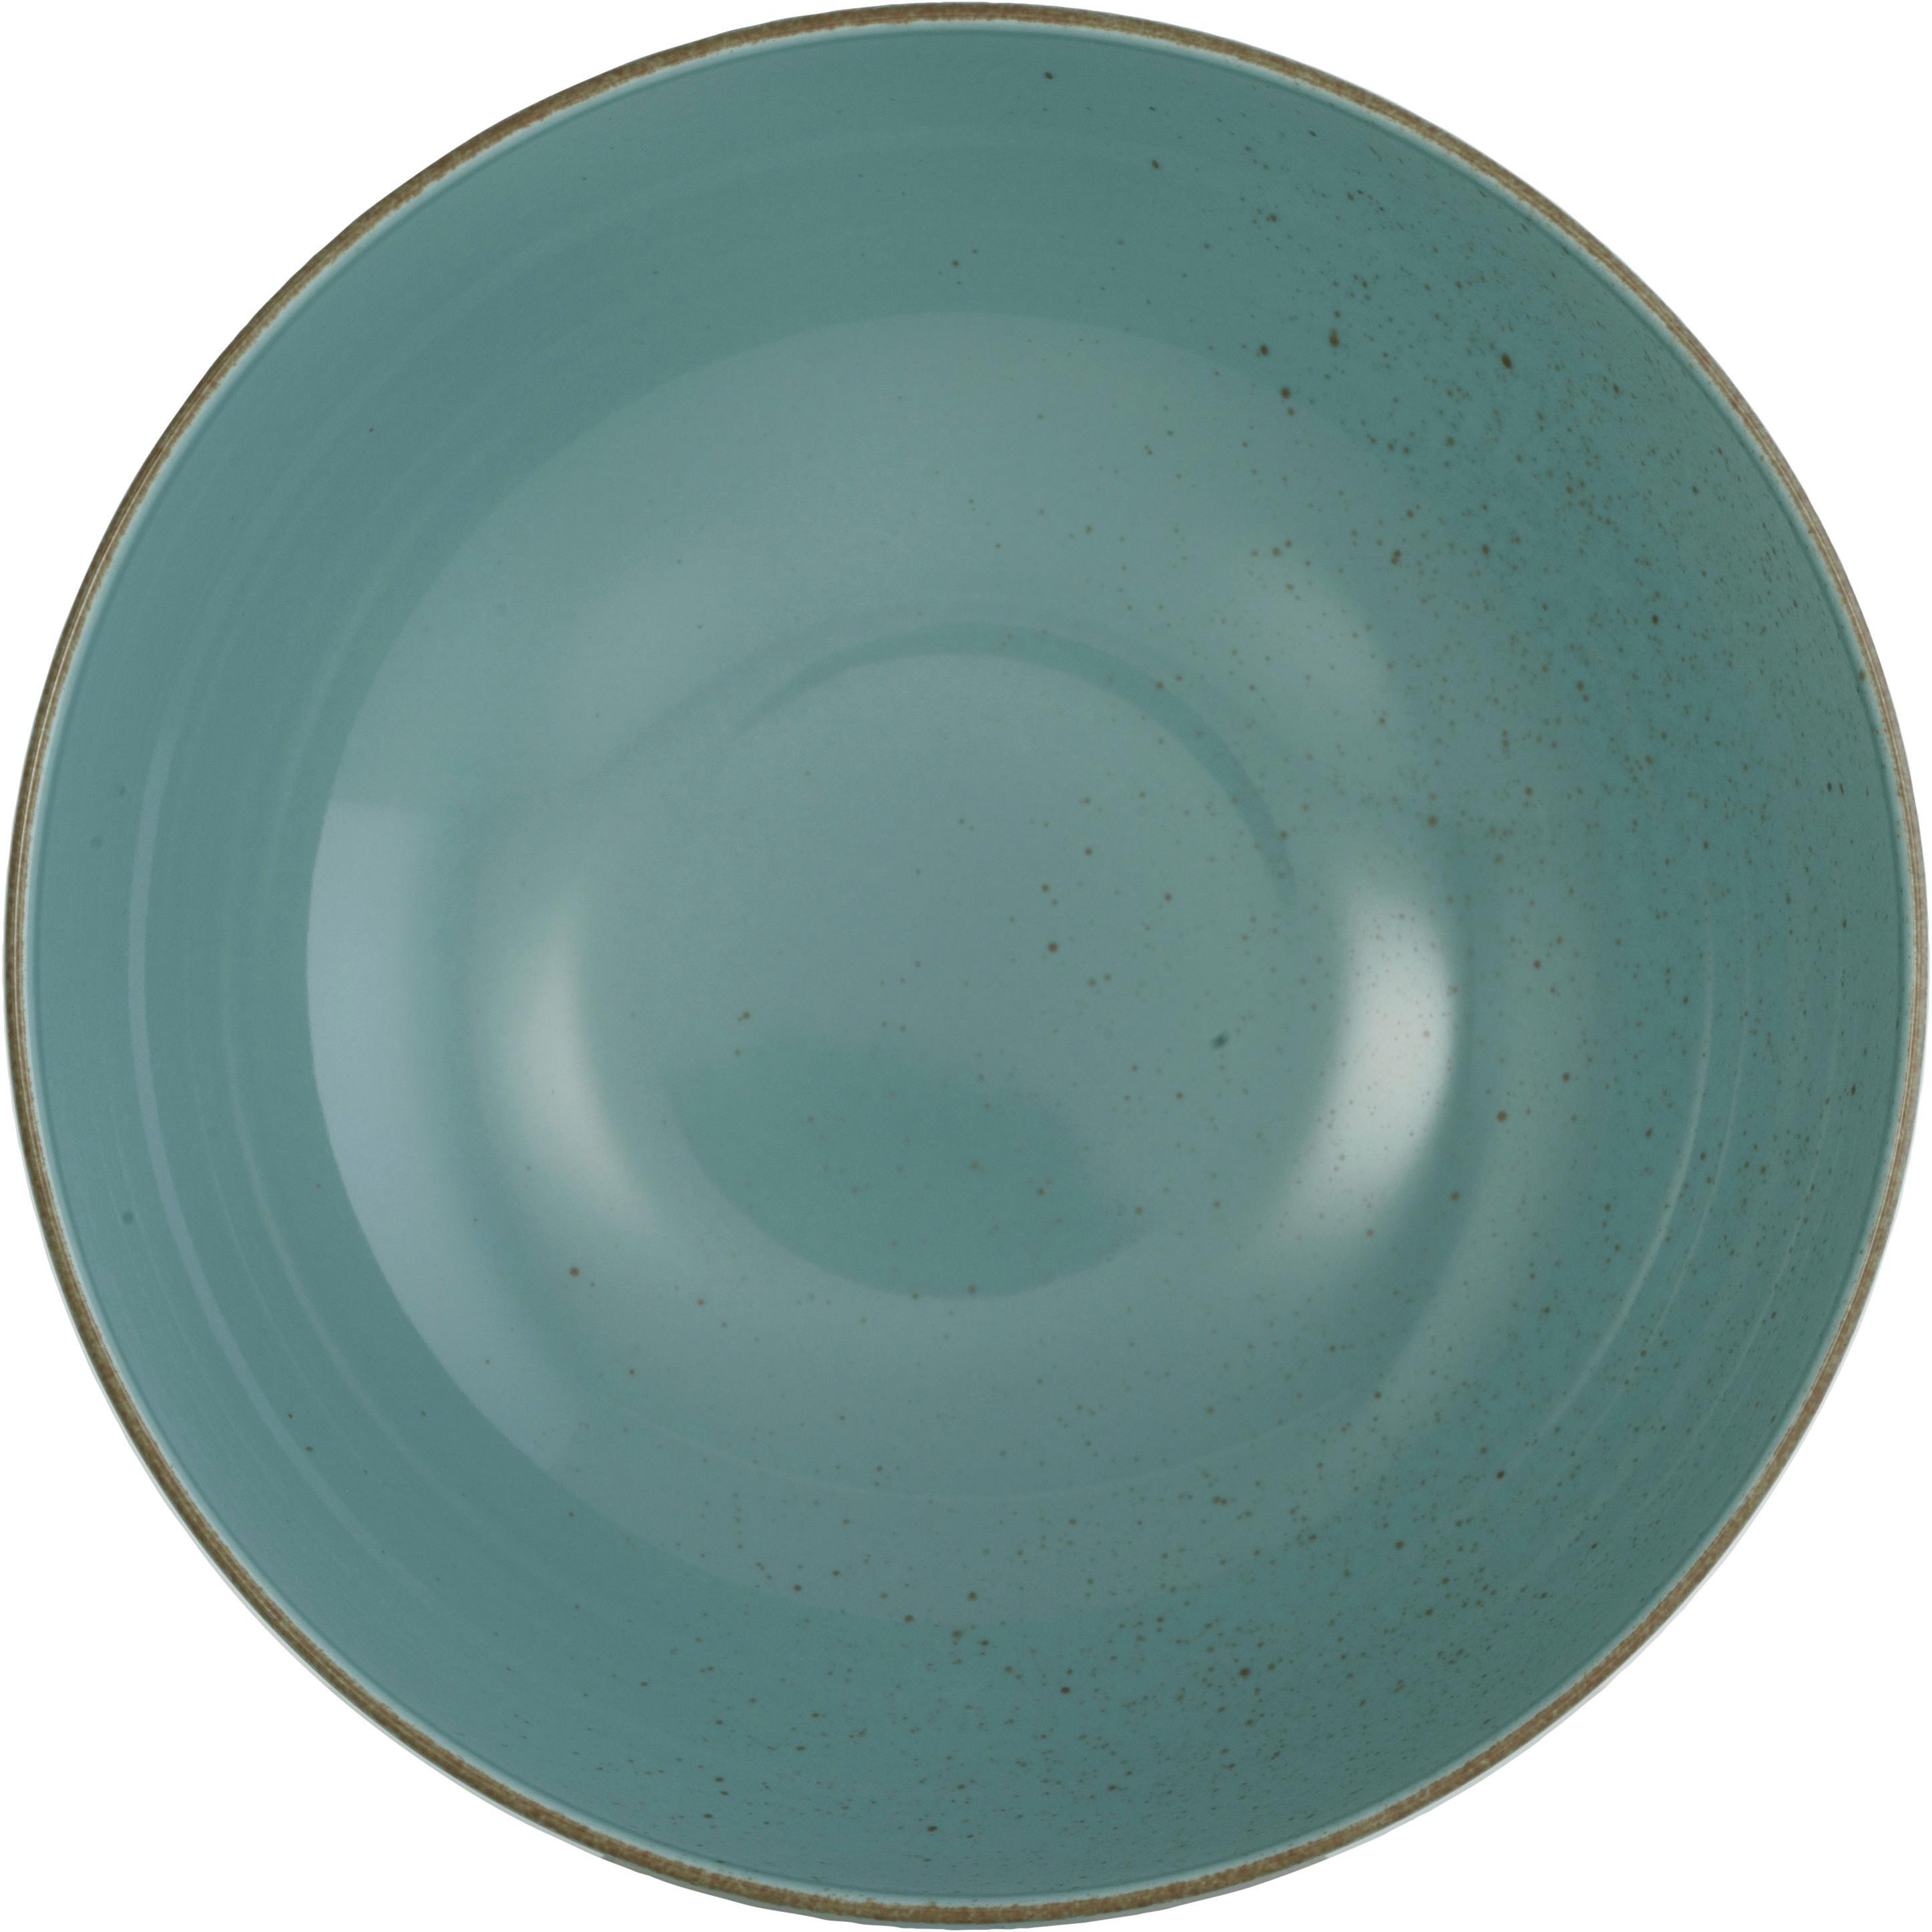 Salátová Mísa Capri, Ø: 25cm - zelená, Moderní, keramika (25/25/8cm) - Premium Living